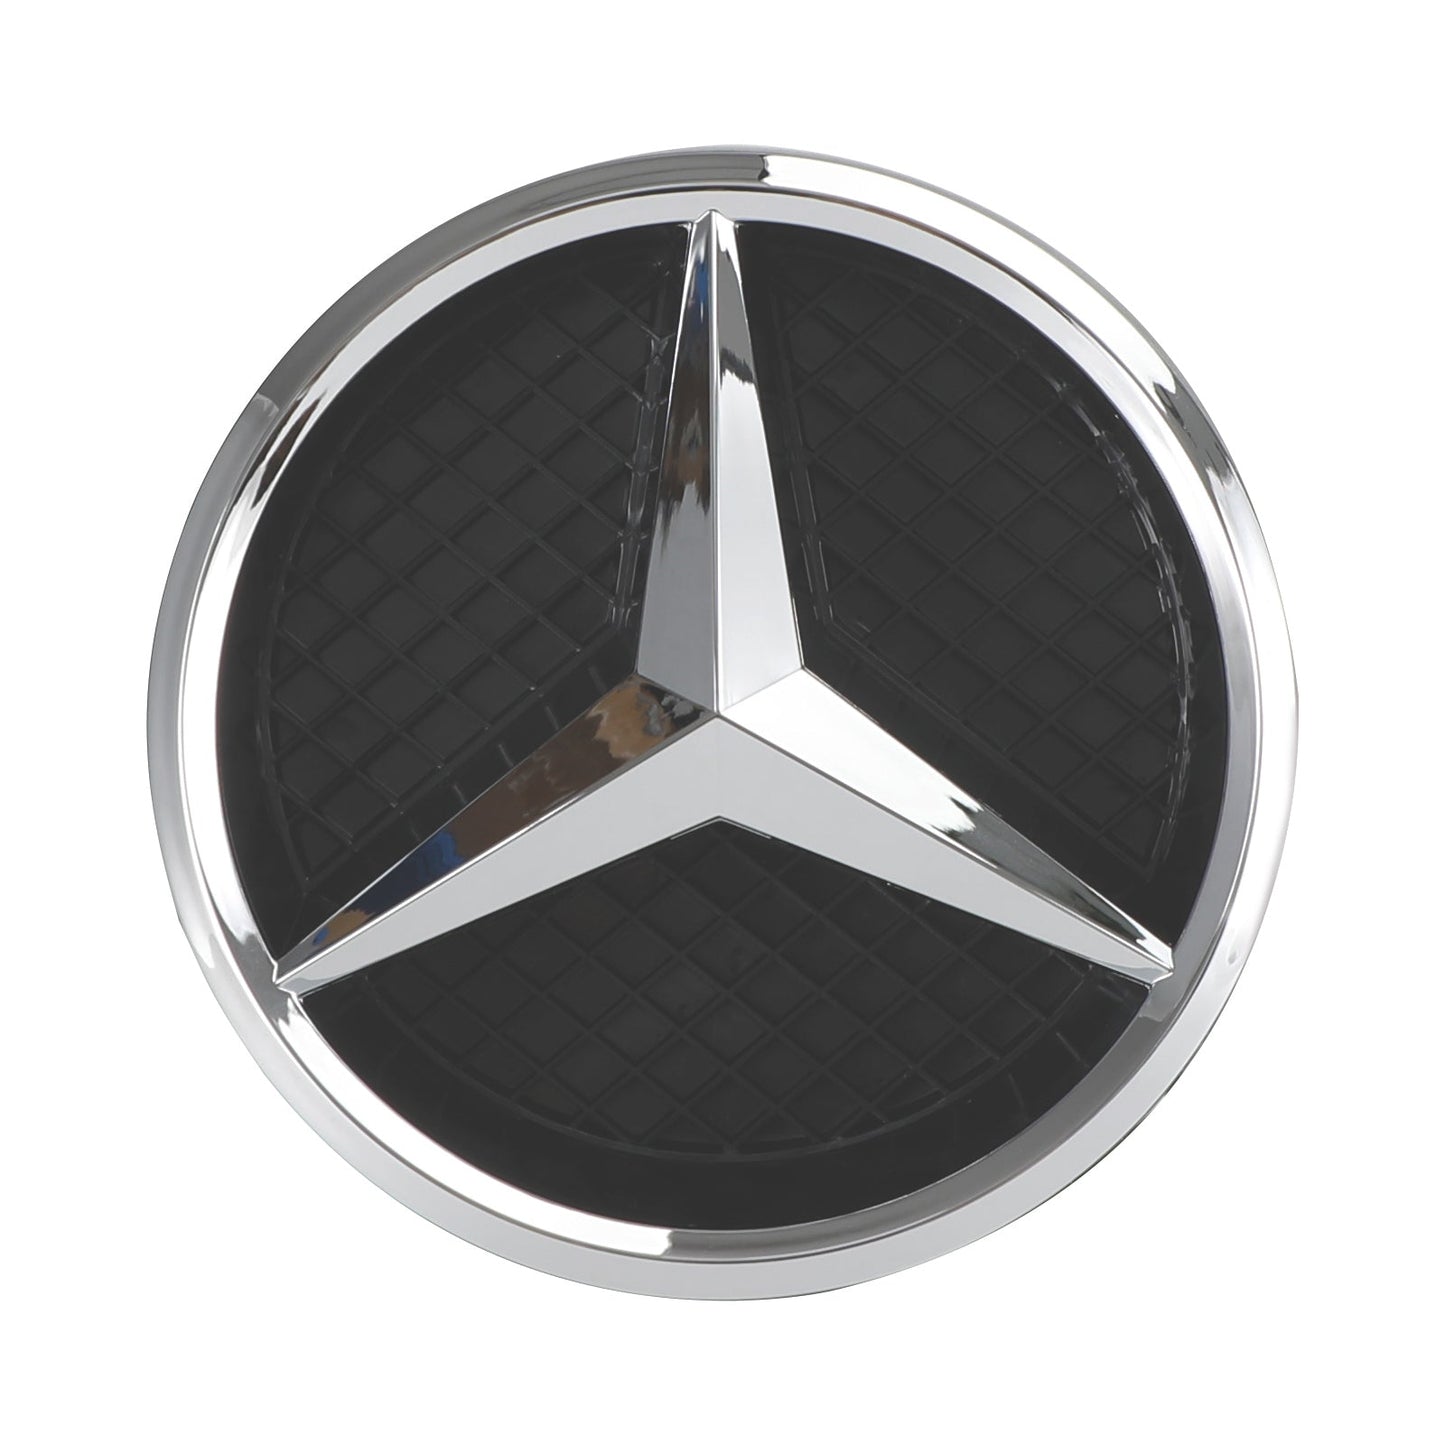 A CLASS W176 2013-2015 Mercedes Benz Grill Car Front Bumper Grille Grill Black/Chrome